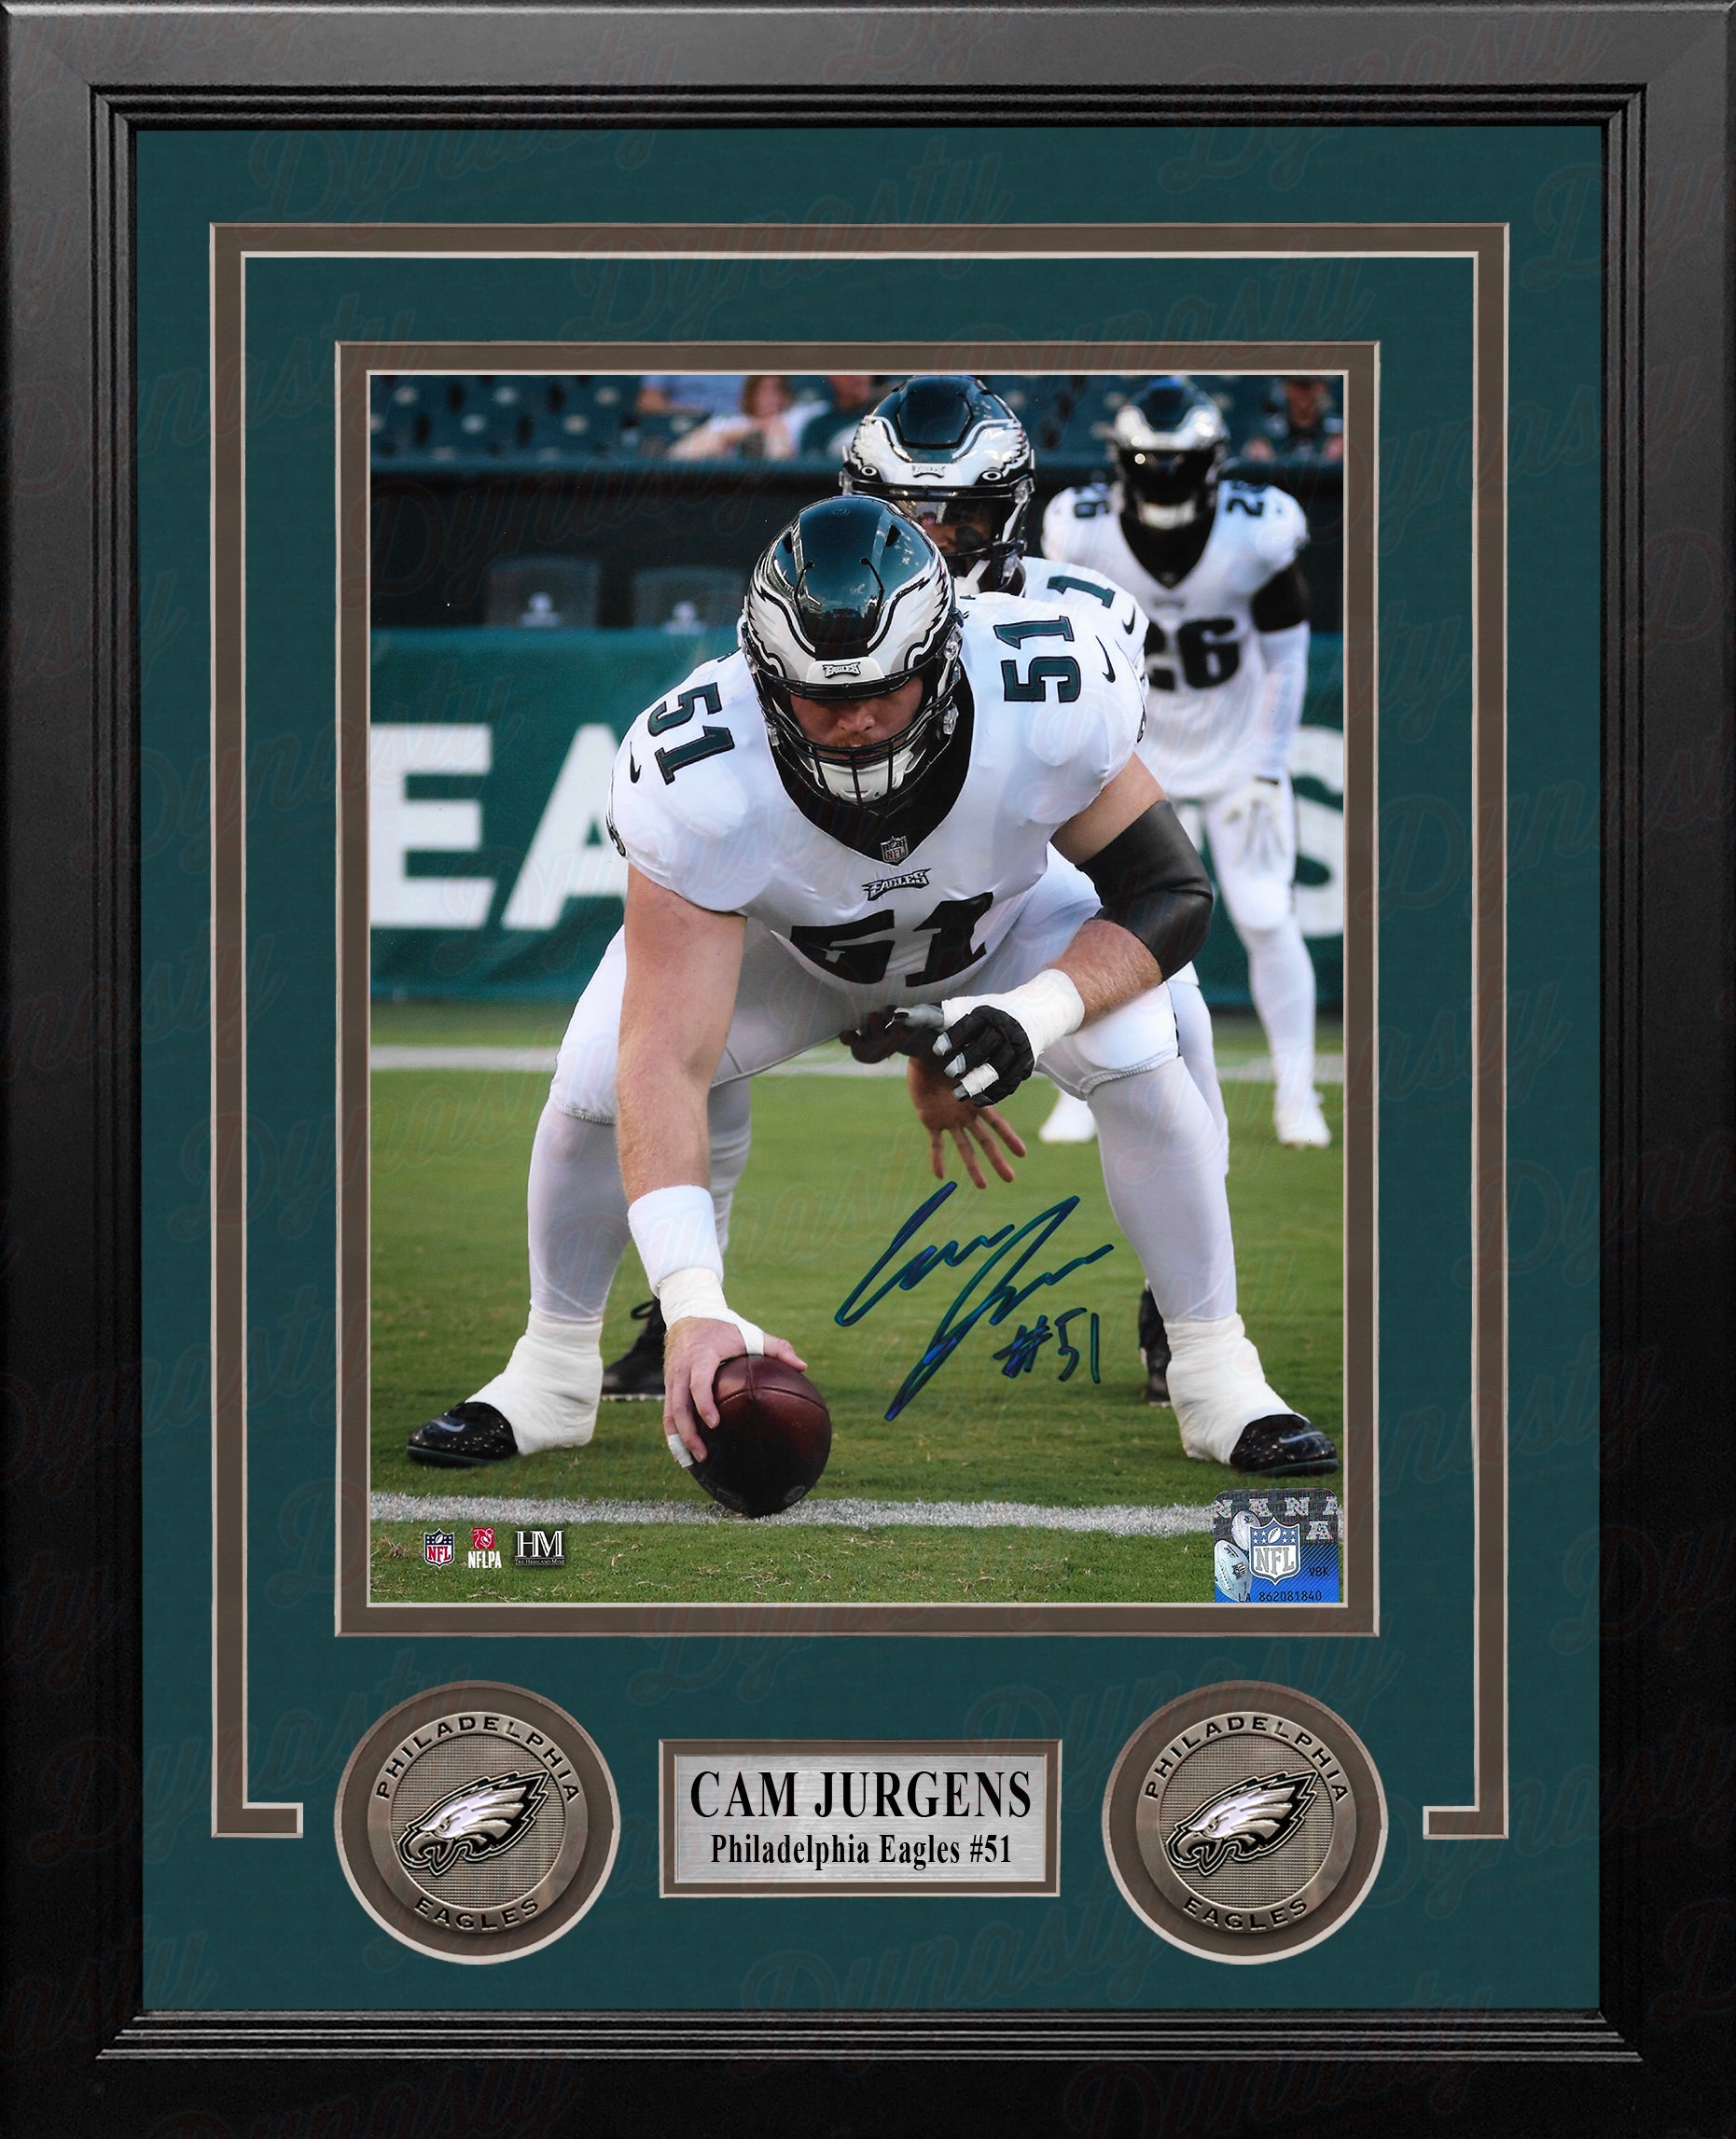 Cam Jurgens in Action Philadelphia Eagles Autographed 8" x 10" Framed Football Photo - Dynasty Sports & Framing 